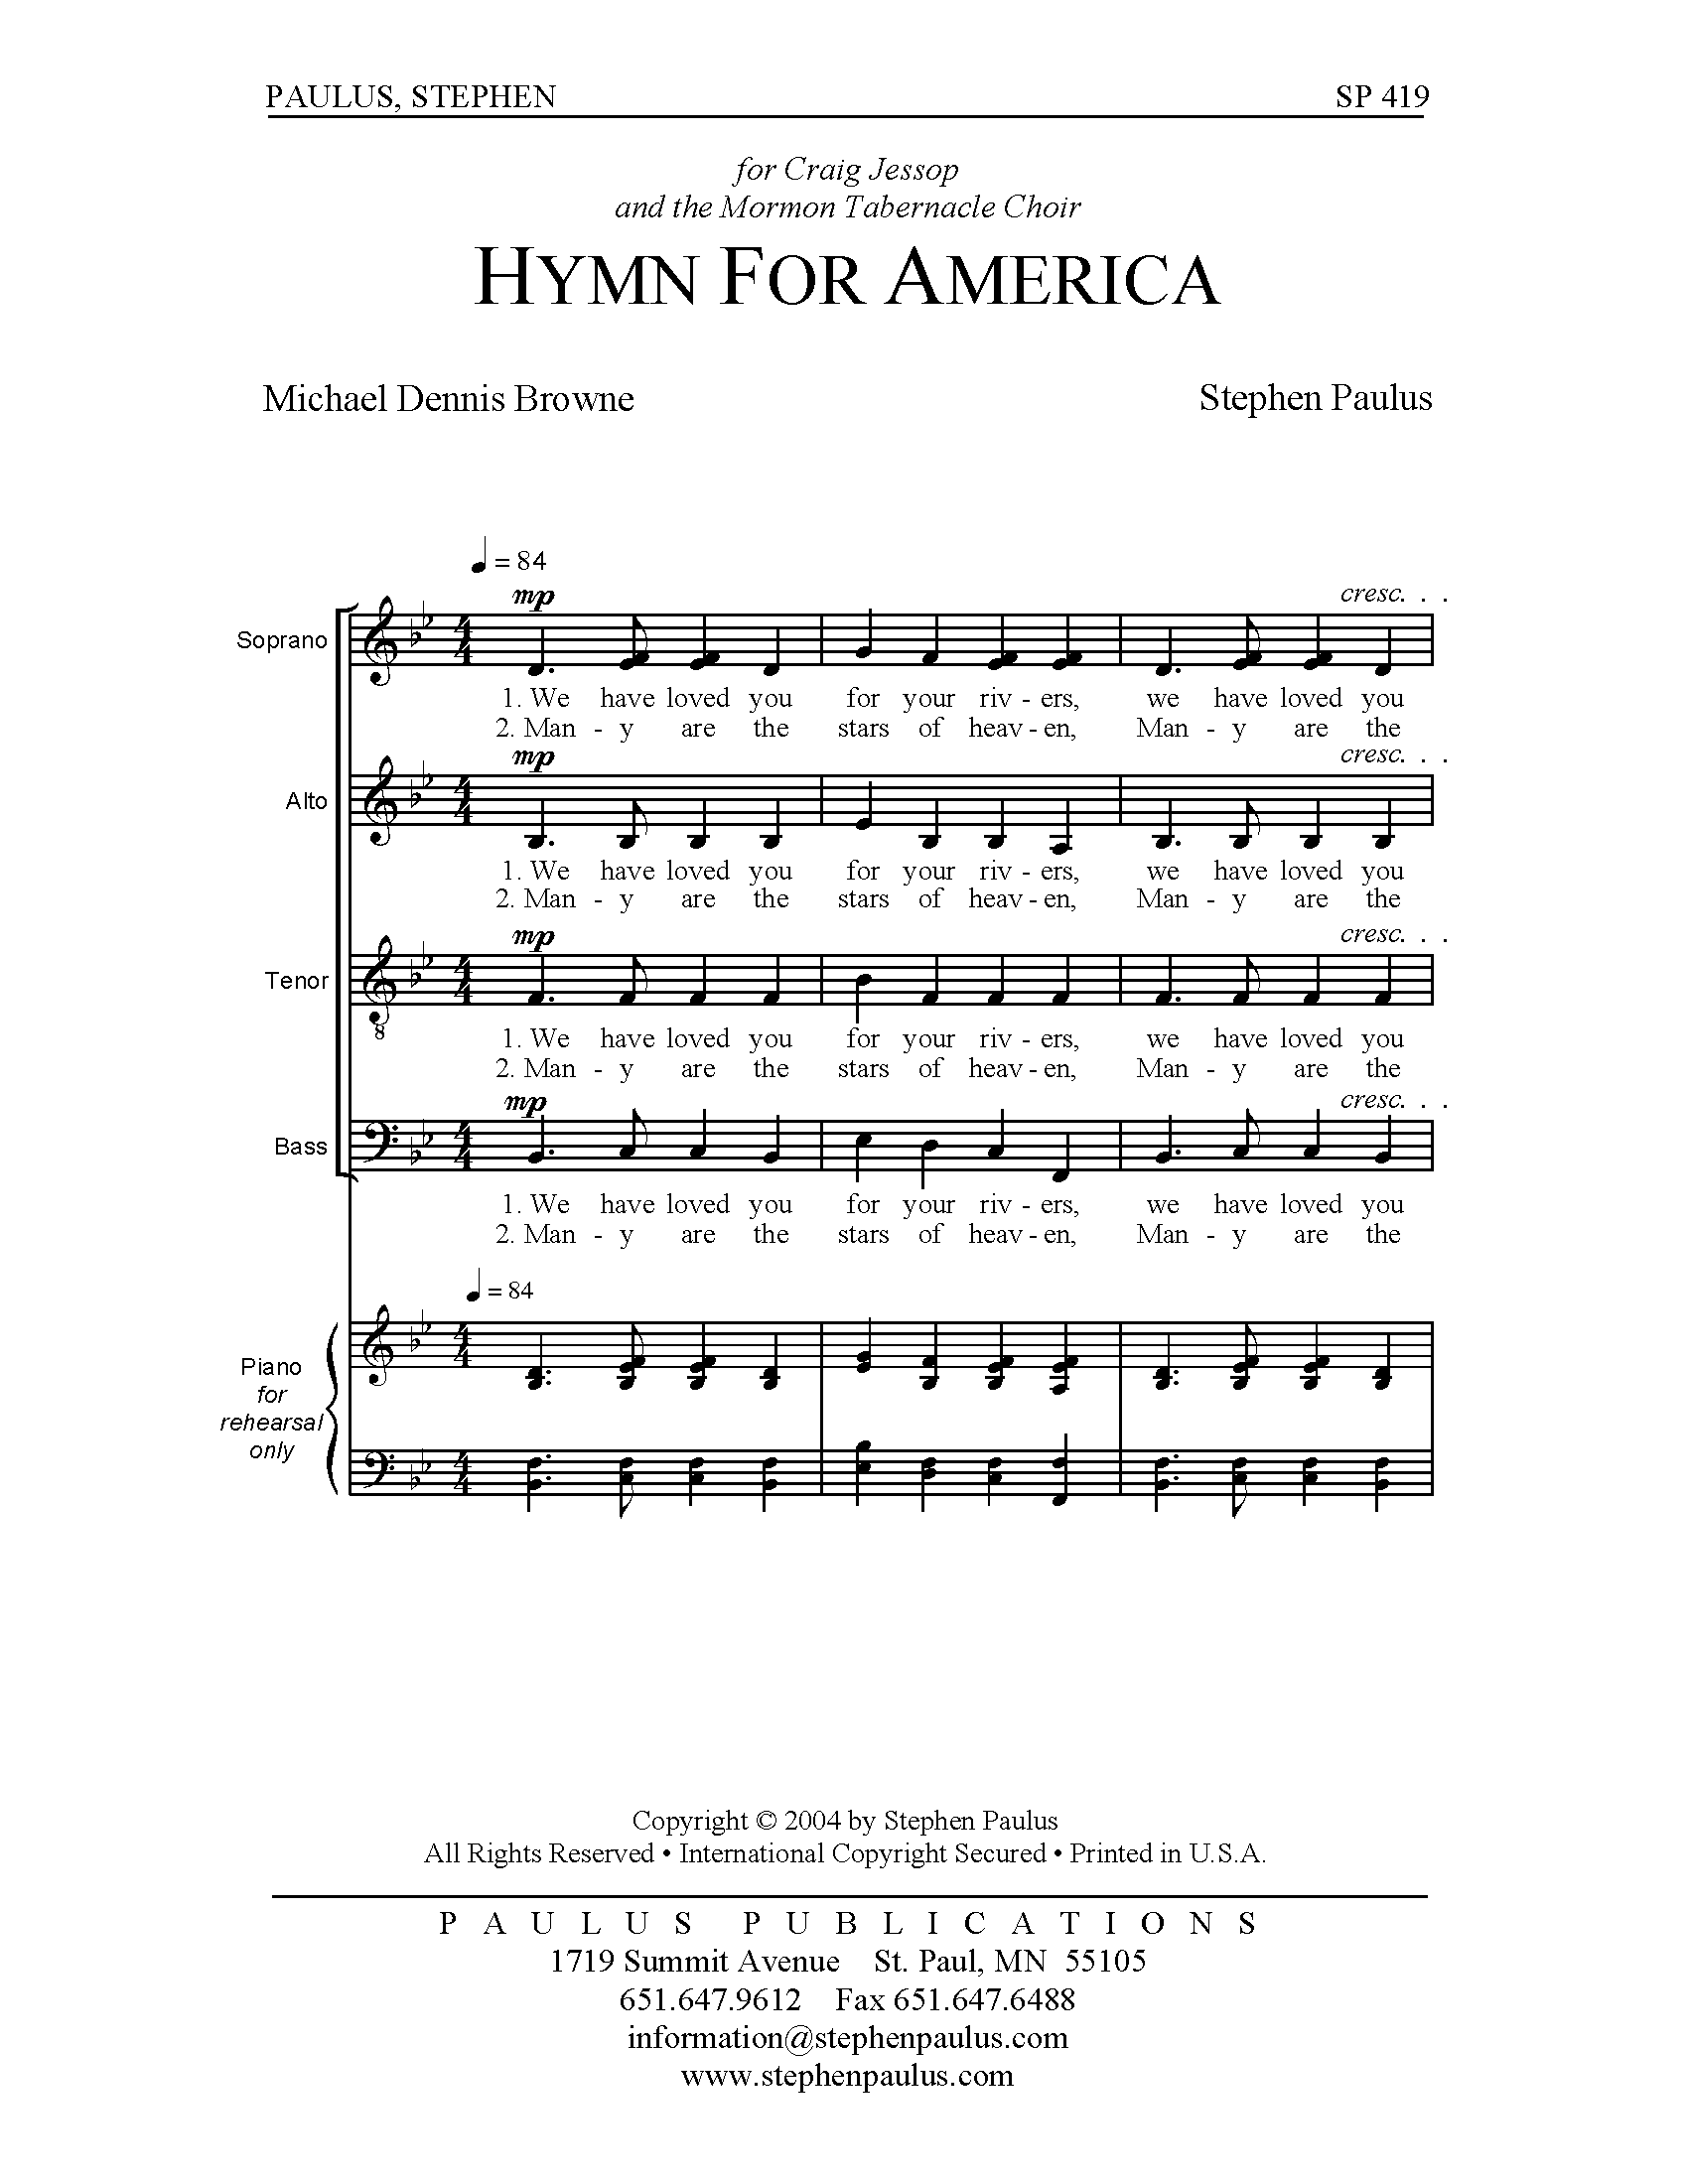 Hymn for America for SATB Chorus, a cappella